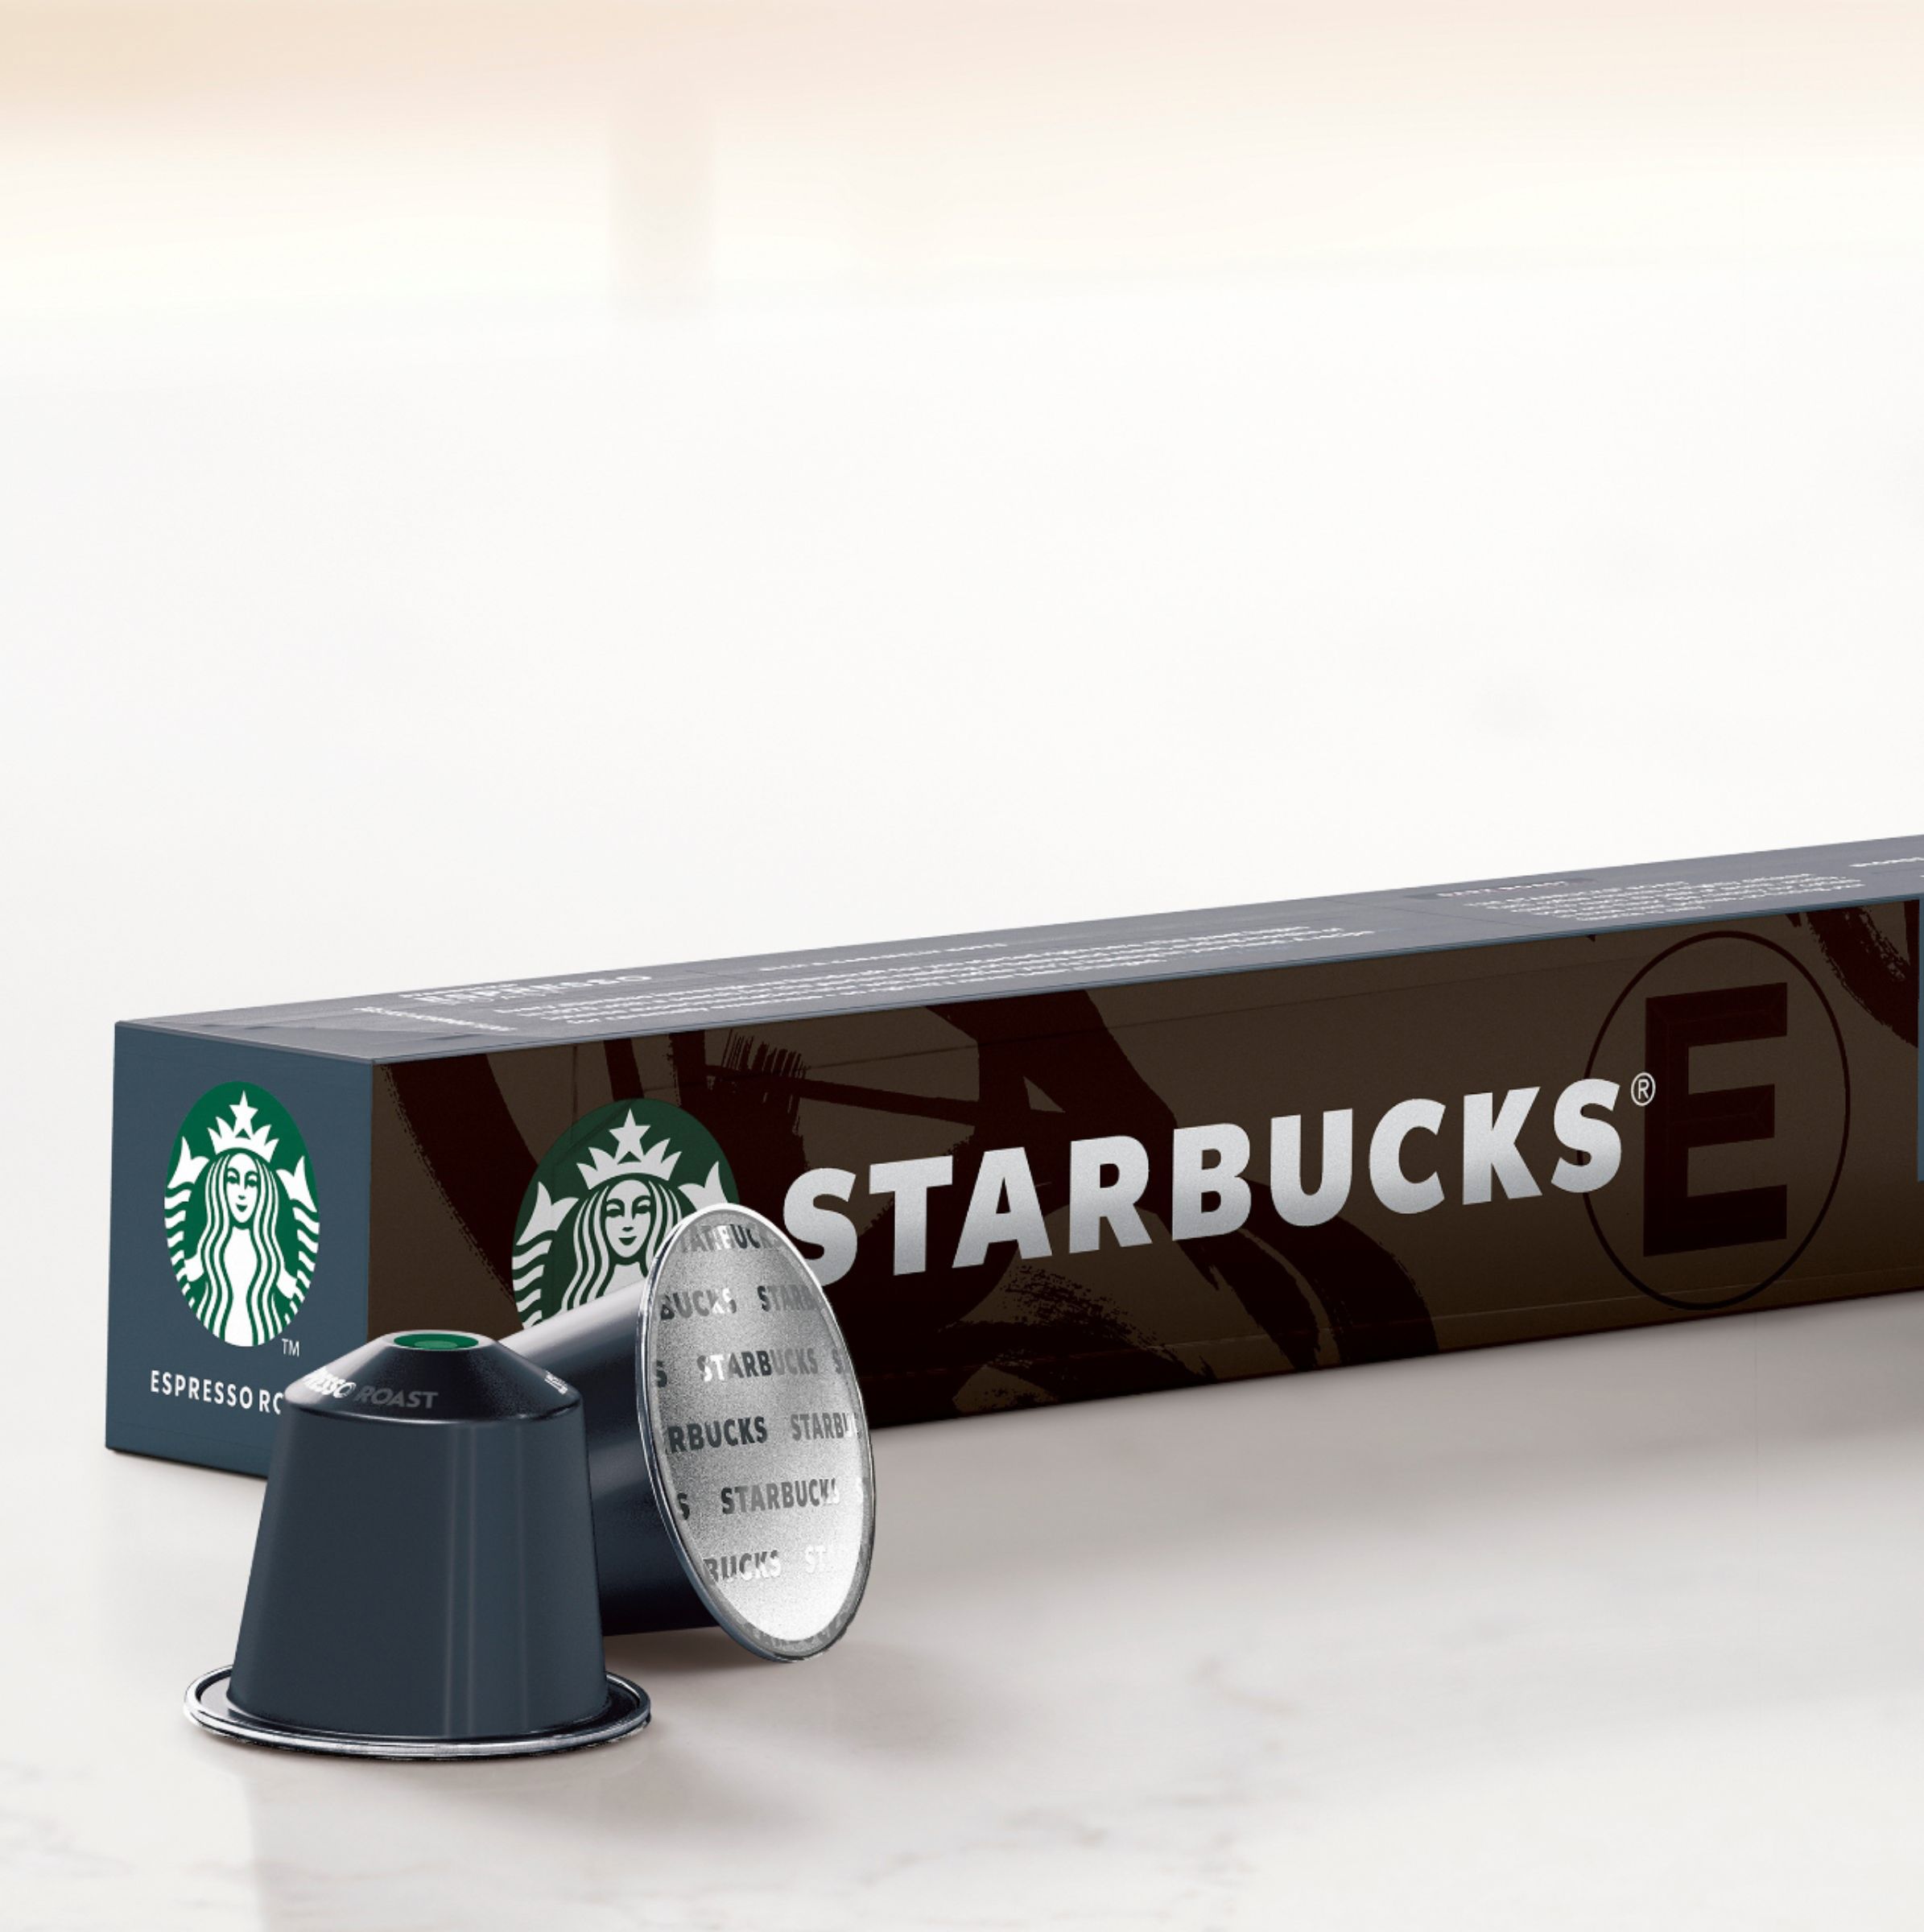 Starbucks Espresso Roast, Box of 10 Nespresso Capsules – Coffee